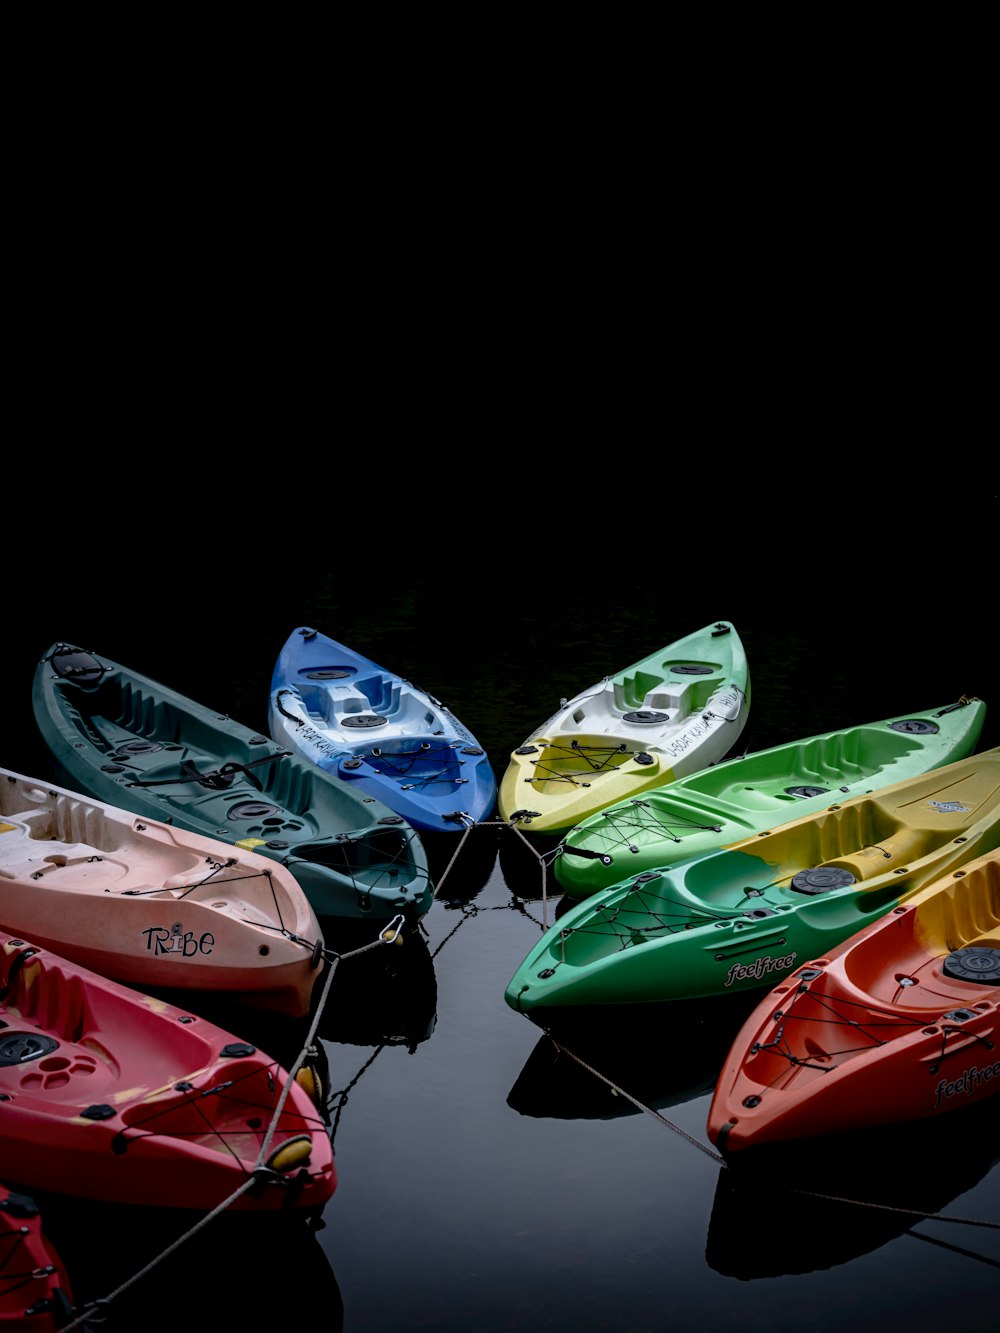 assorted color kayak on black surface